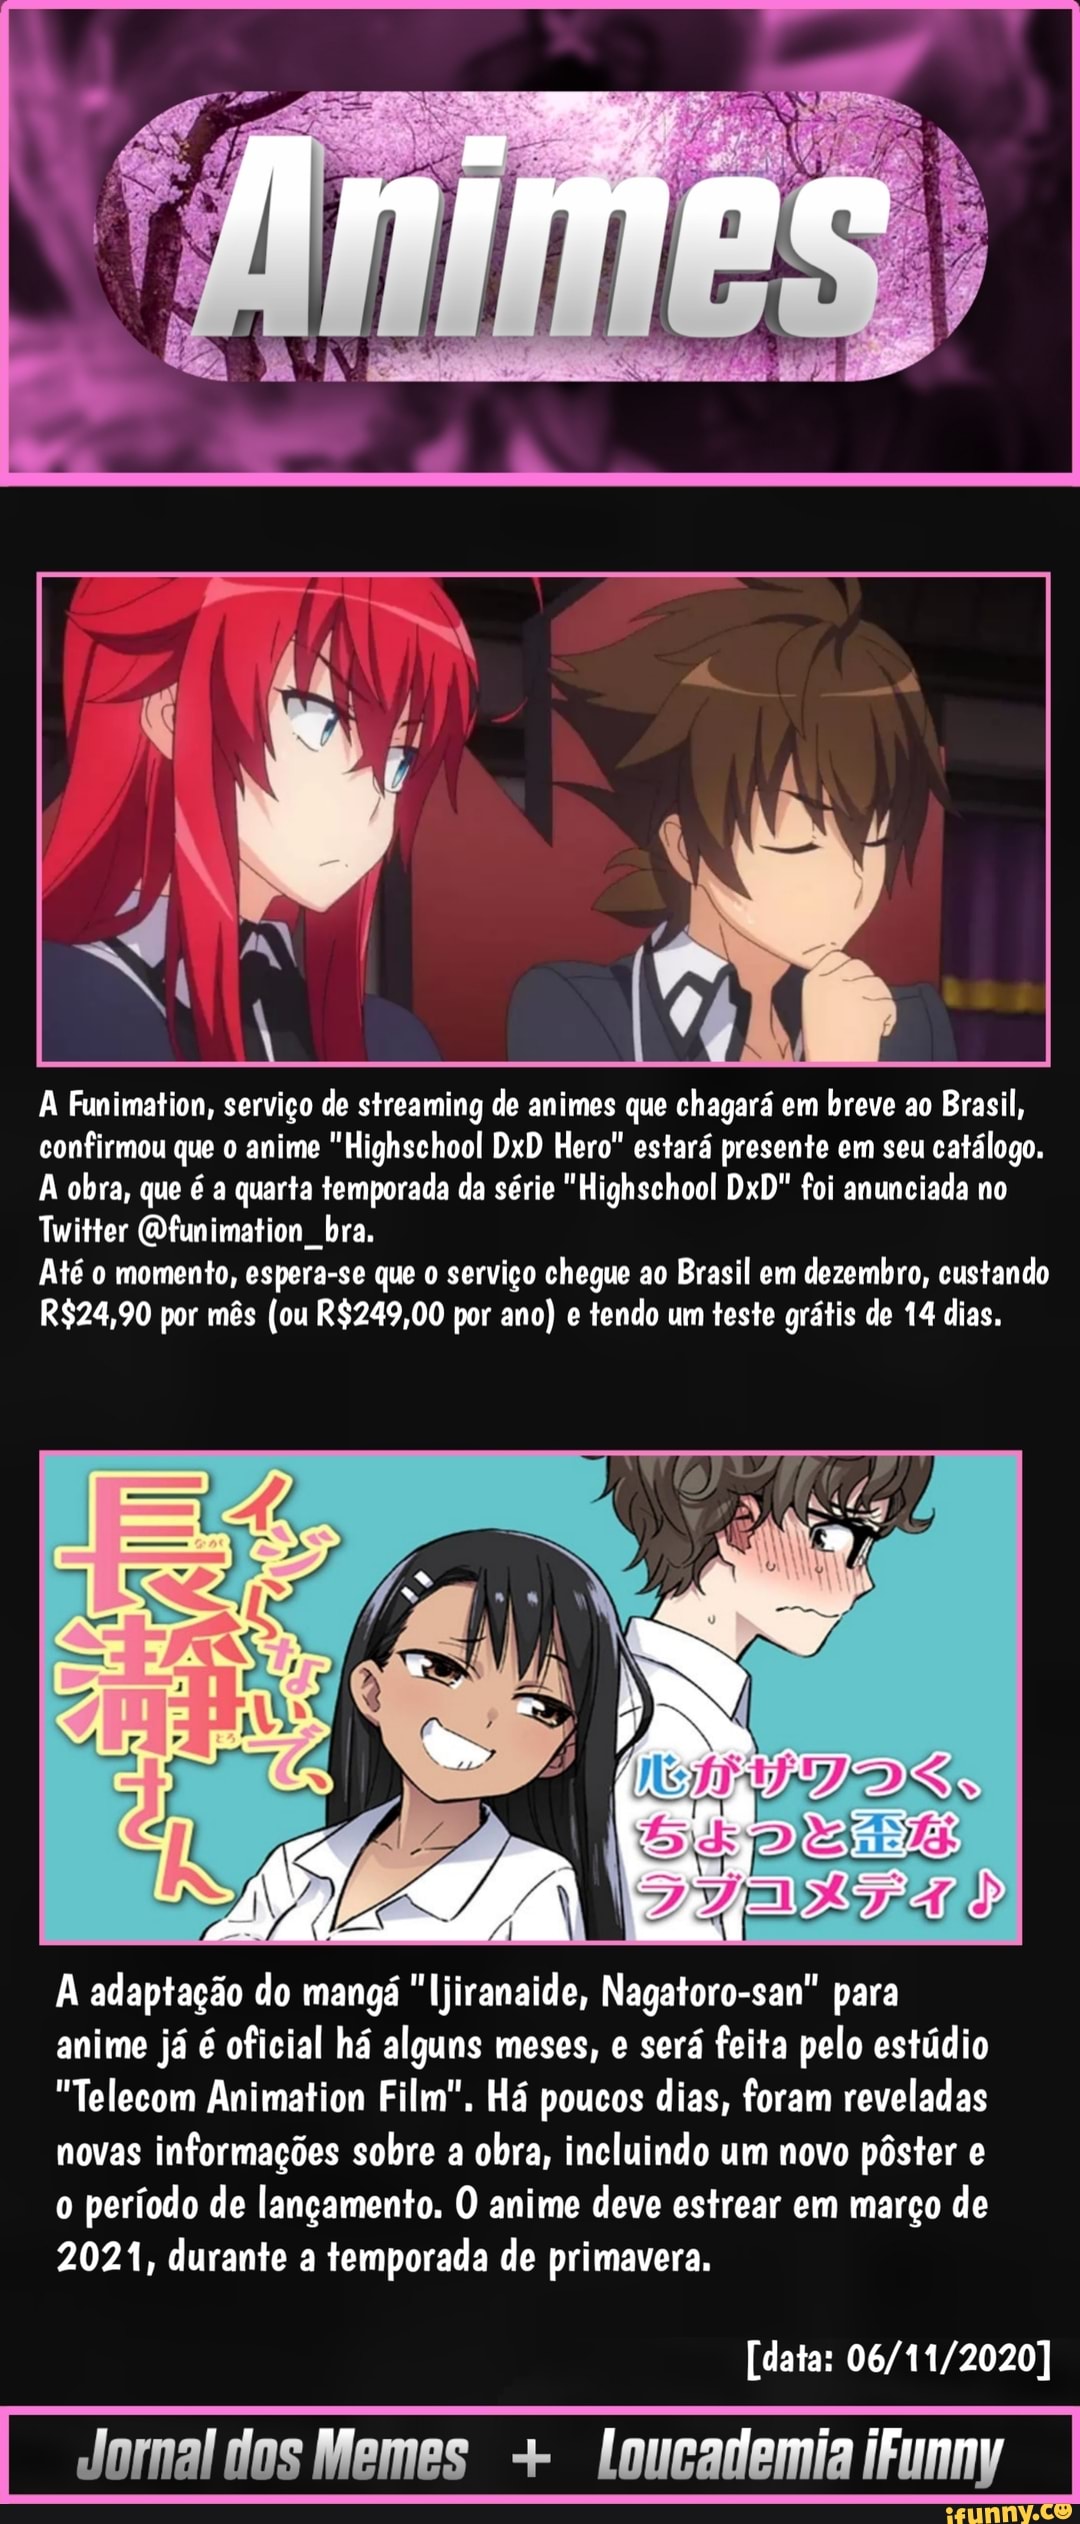 Otaku_Sincero03 on X: Mds @funimation_bra, quanto anime dublado